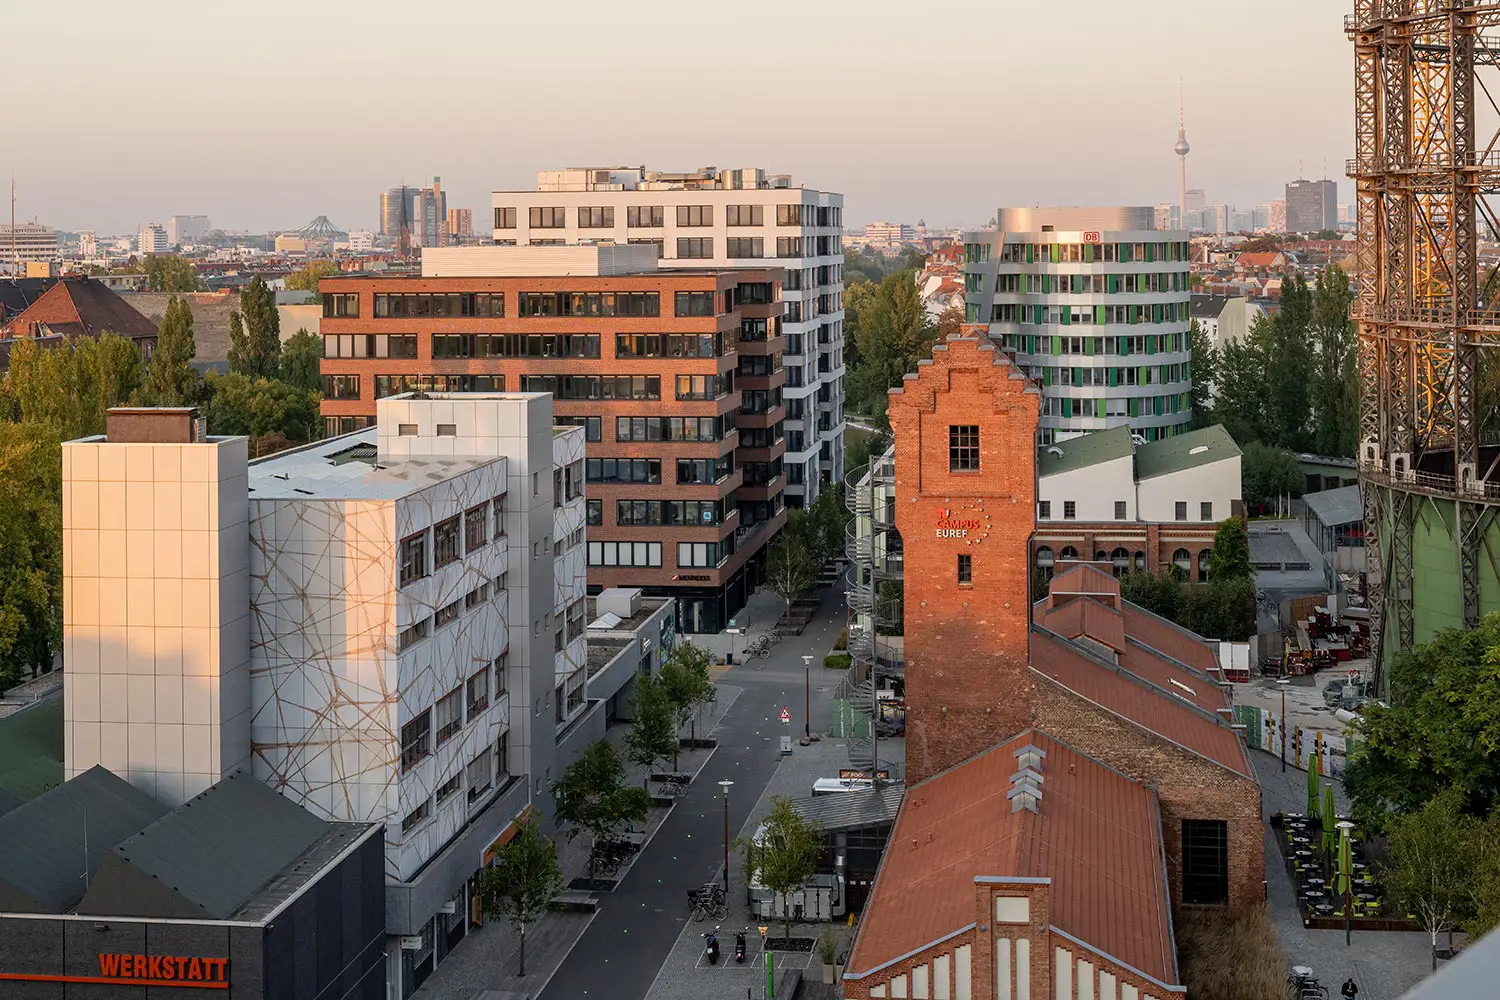 Aerial view of the EUREF campus in Berlin-Schöneberg, home of ubitricity's headquarter.